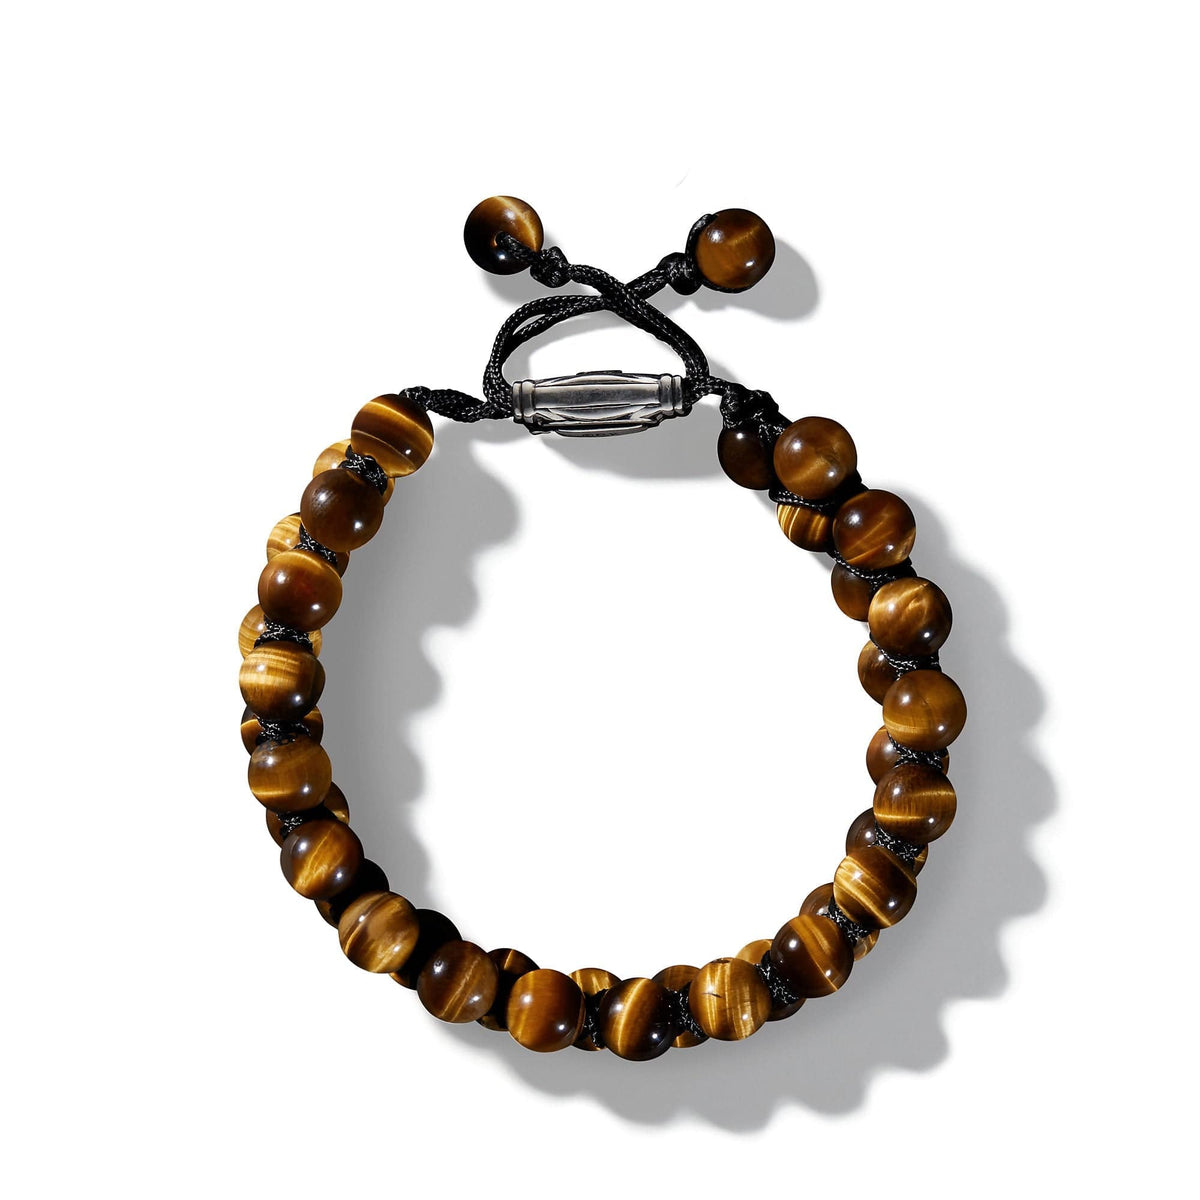 Spiritual Beads Two-Row Bracelet with Tiger's Eye, Long's Jewelers